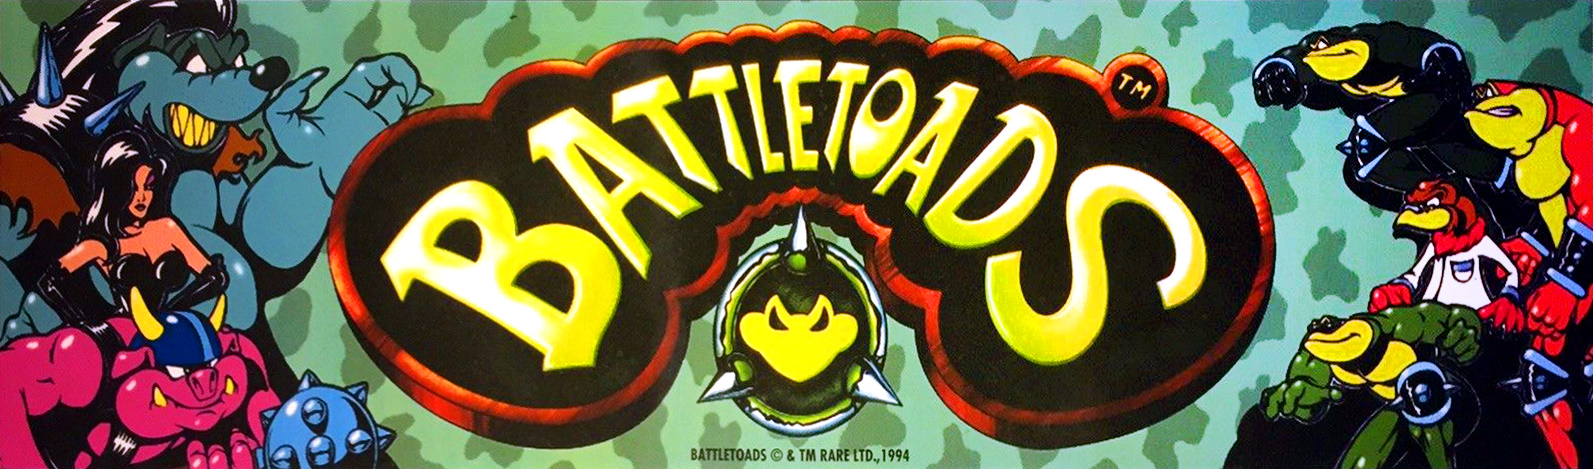 download battletoads arcade for free